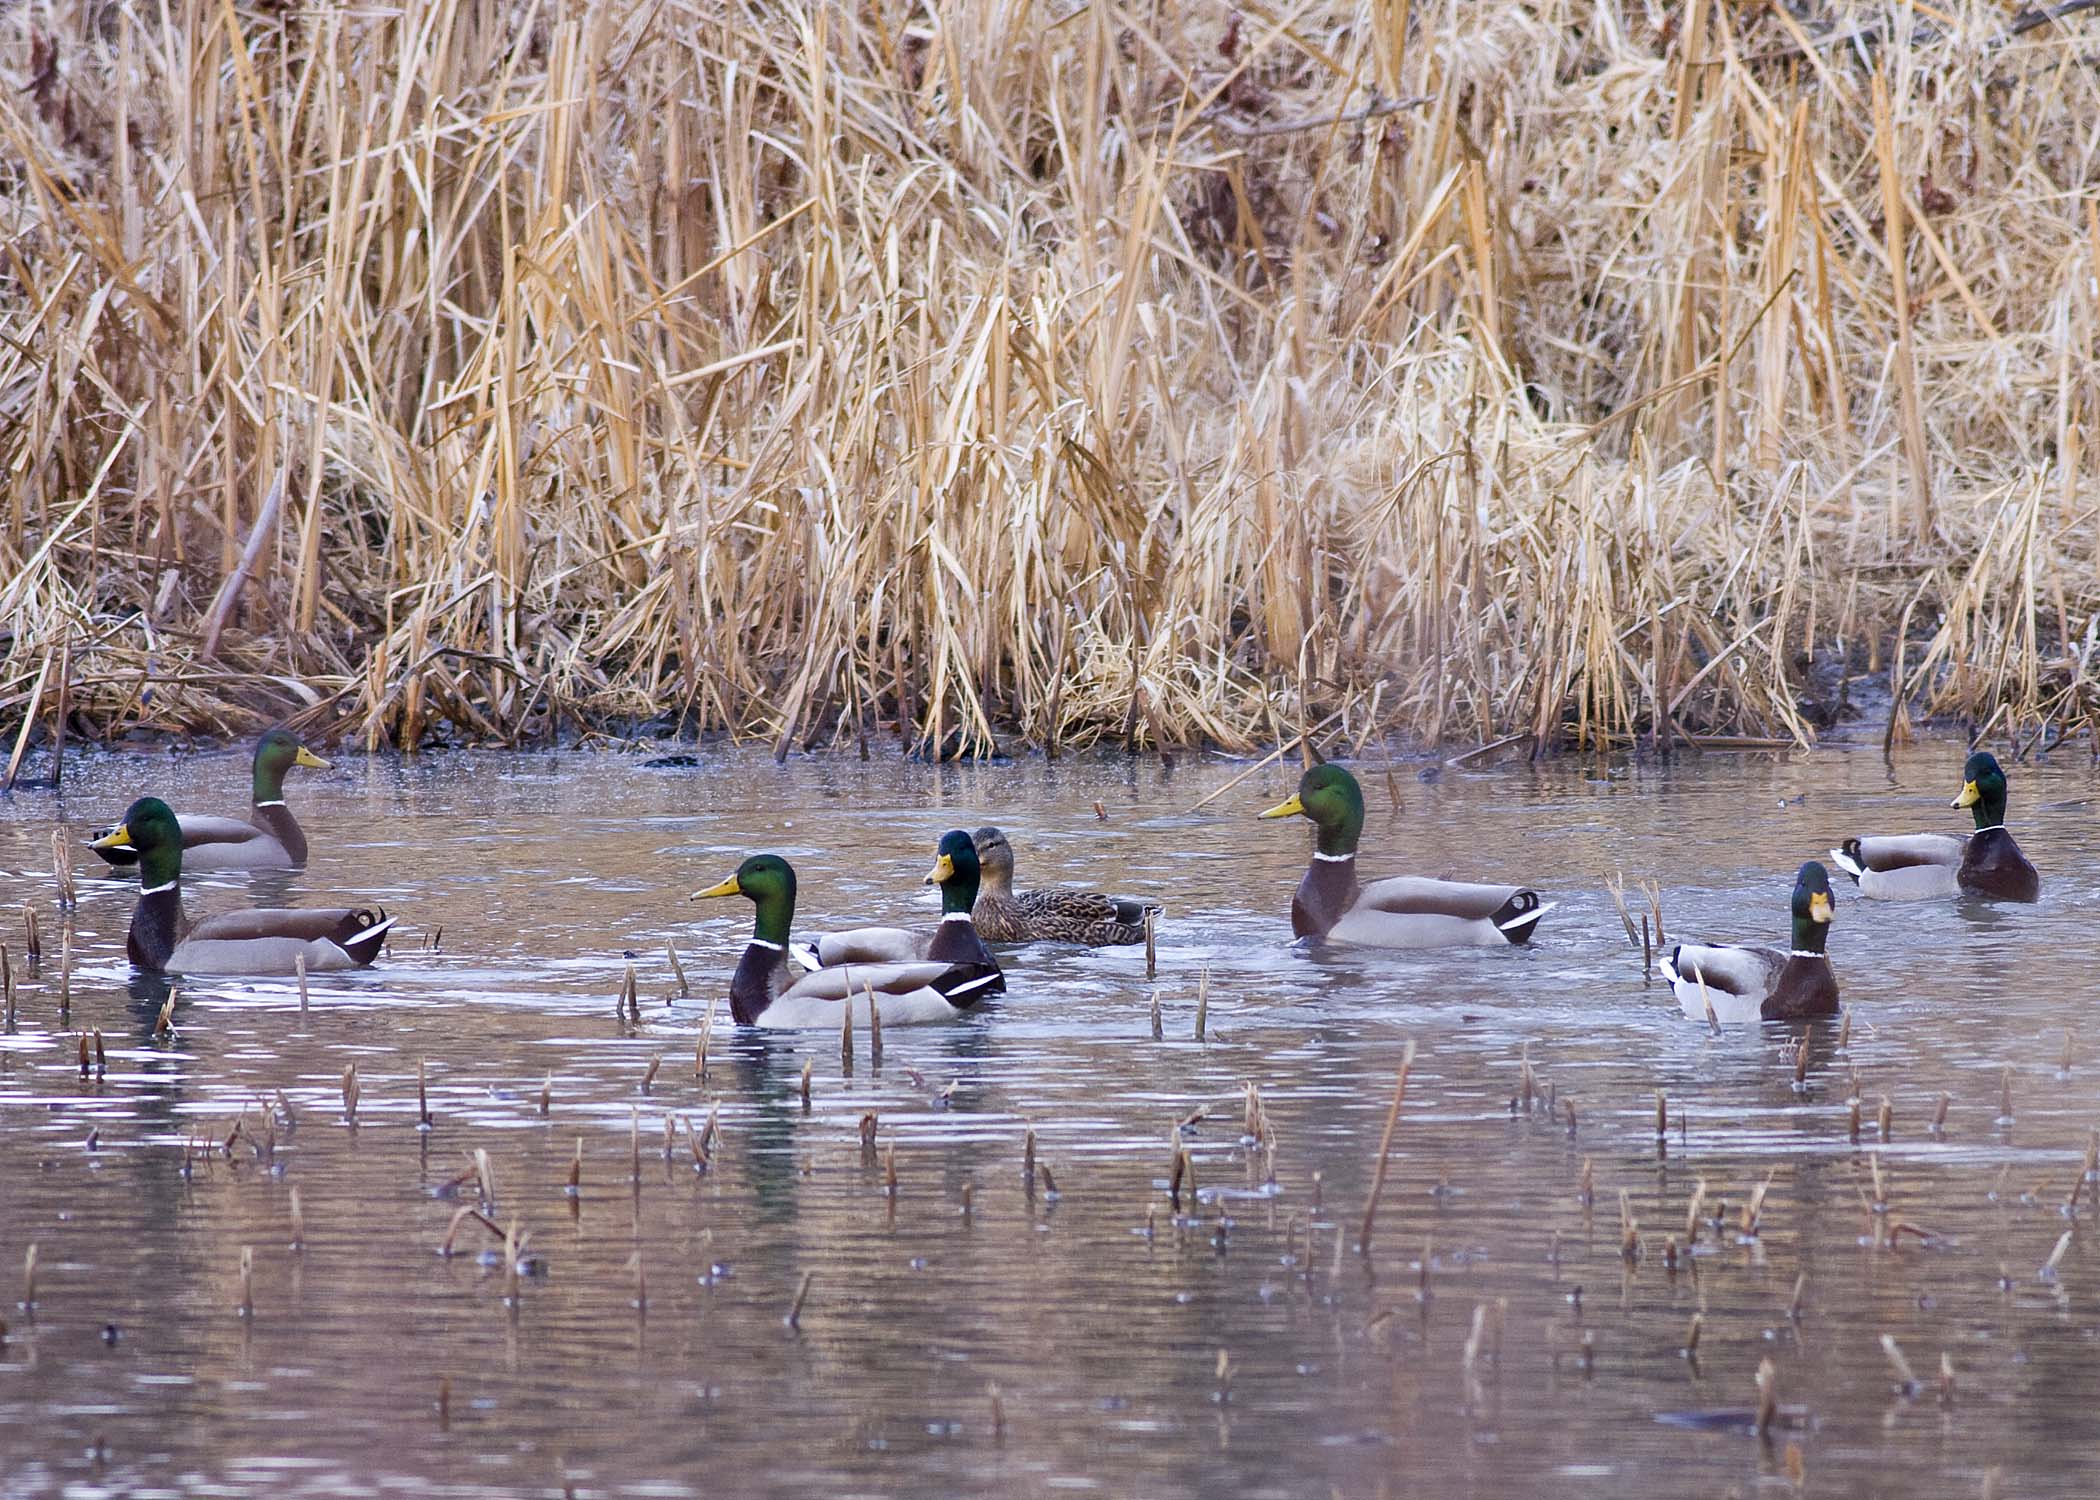 Mallard ducks swimming in the wetlands.